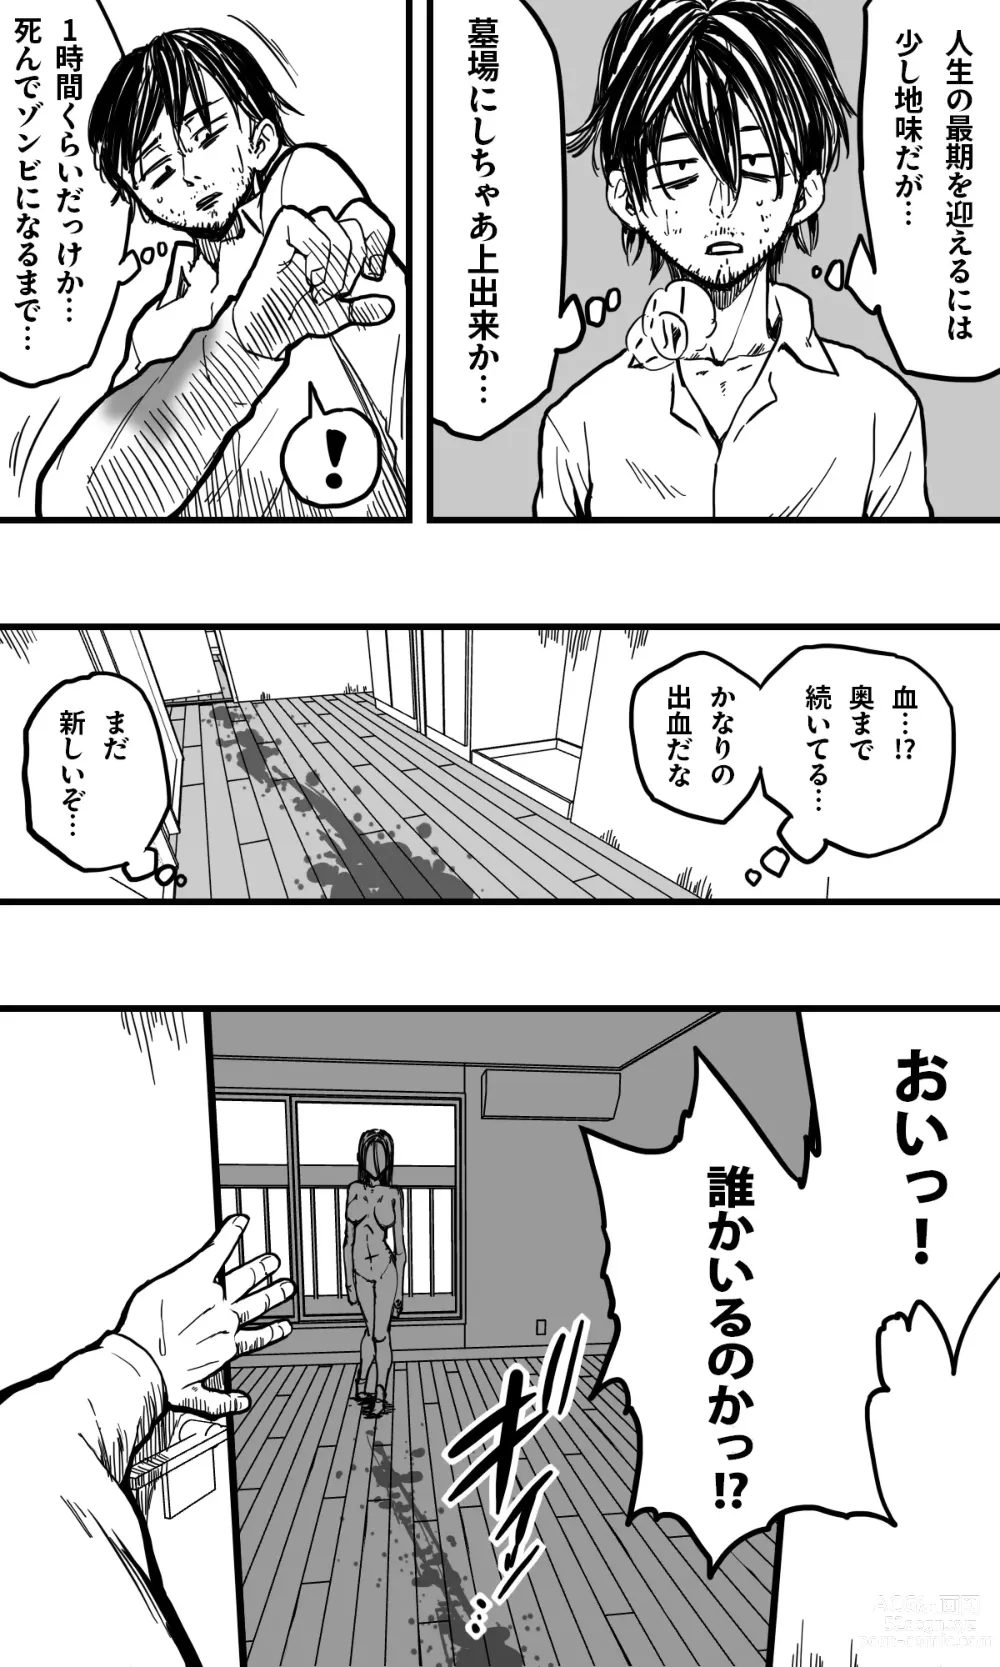 Page 4 of doujinshi POLMANGA_10